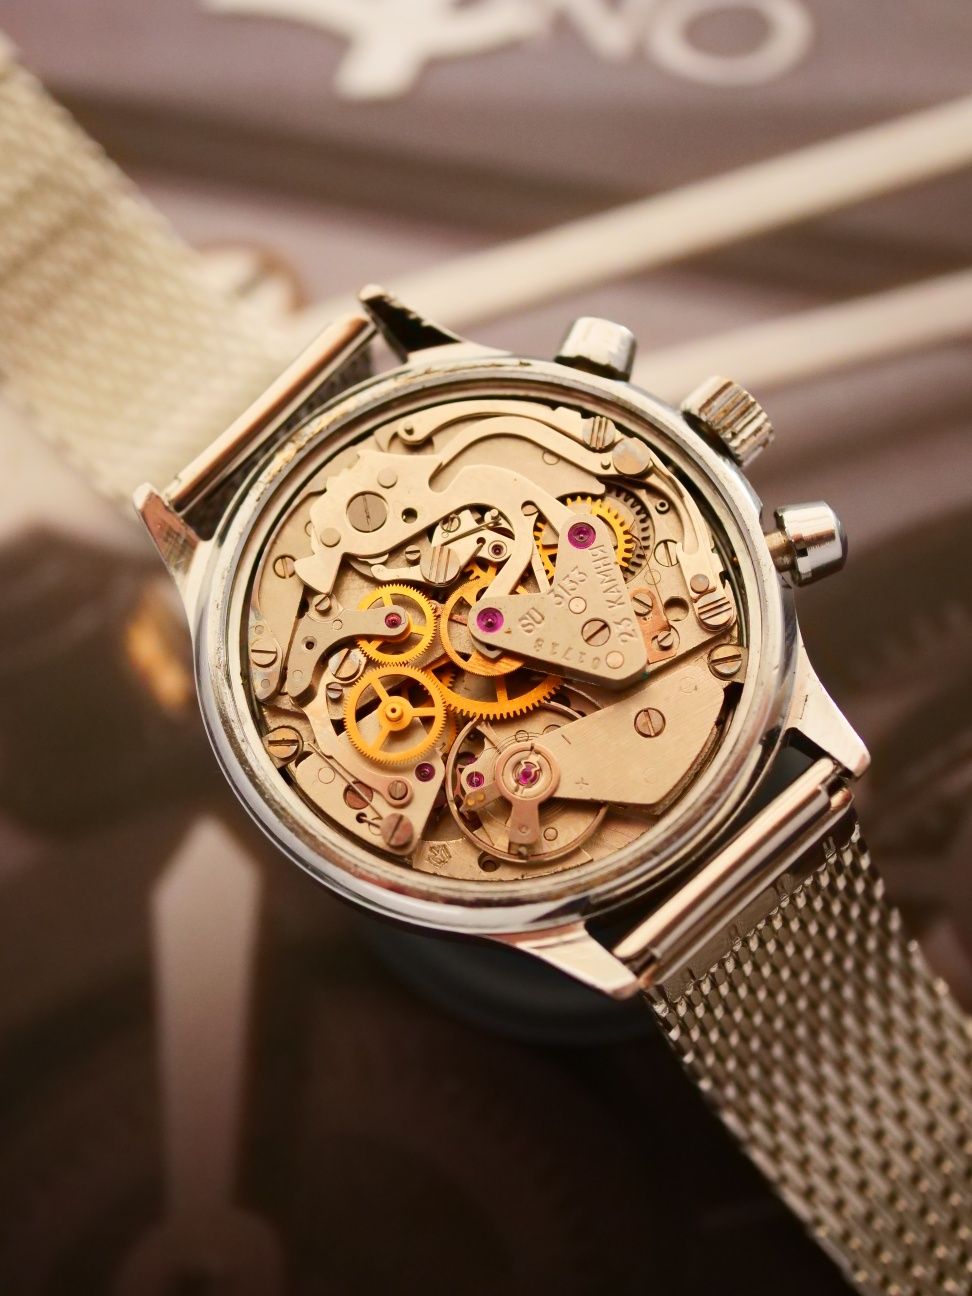 Poliot chronograph stary zegarek radziecki 3133 vintage chrono piekny